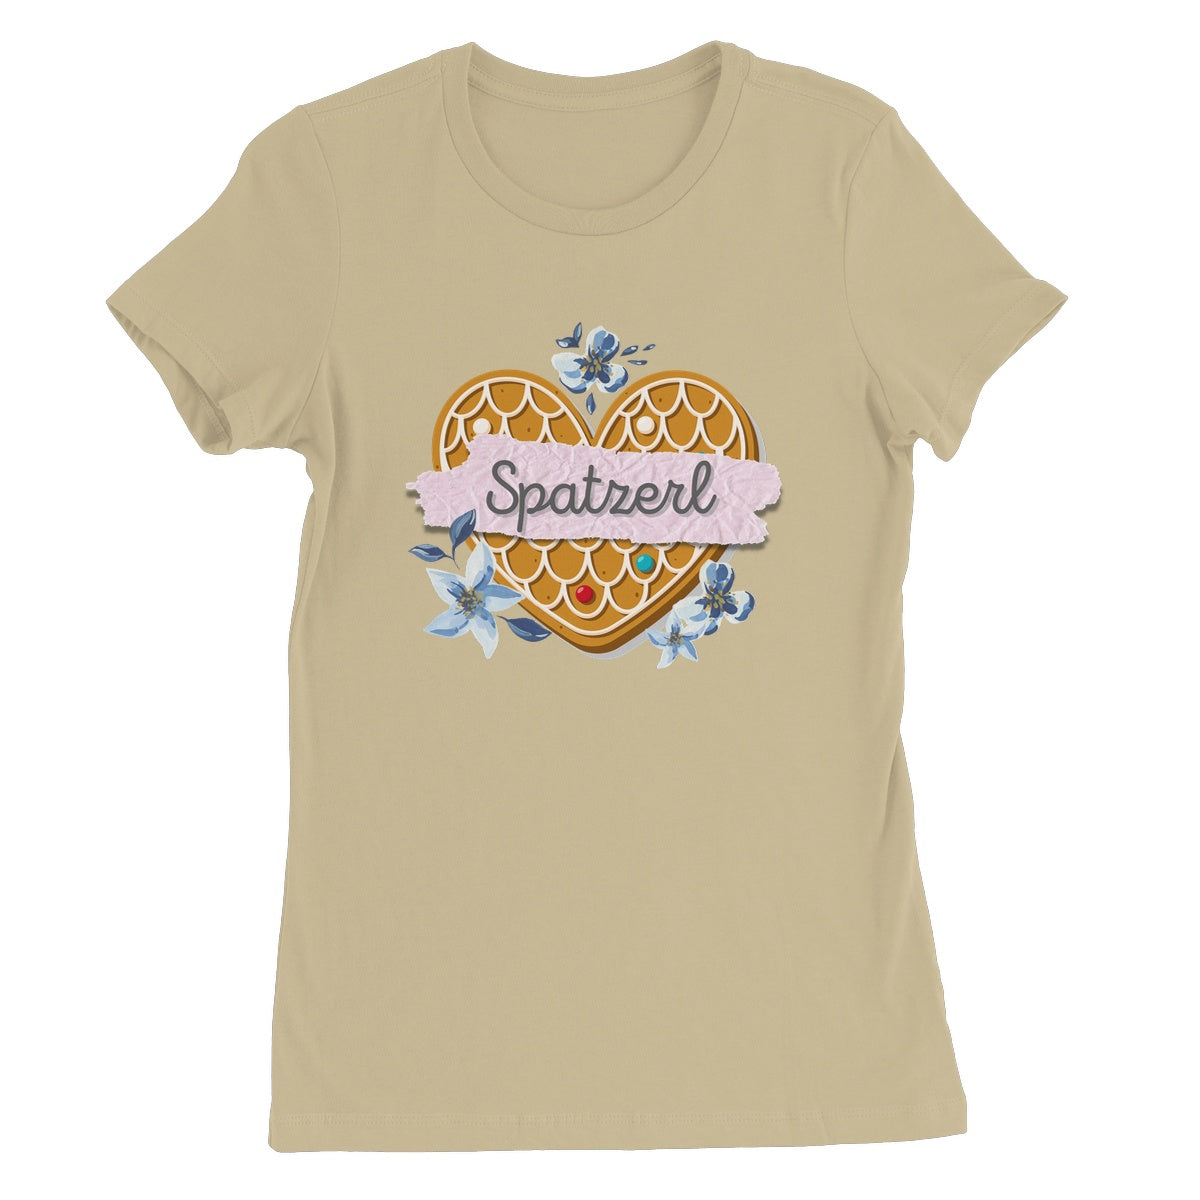 Women's Bavarian Graphic T-Shirt "Spatzerl" gingerbread heart & floral print - 7 colours - Bavari Shop - Bavarian Outfits, Dirndl, Lederhosen & Accessories